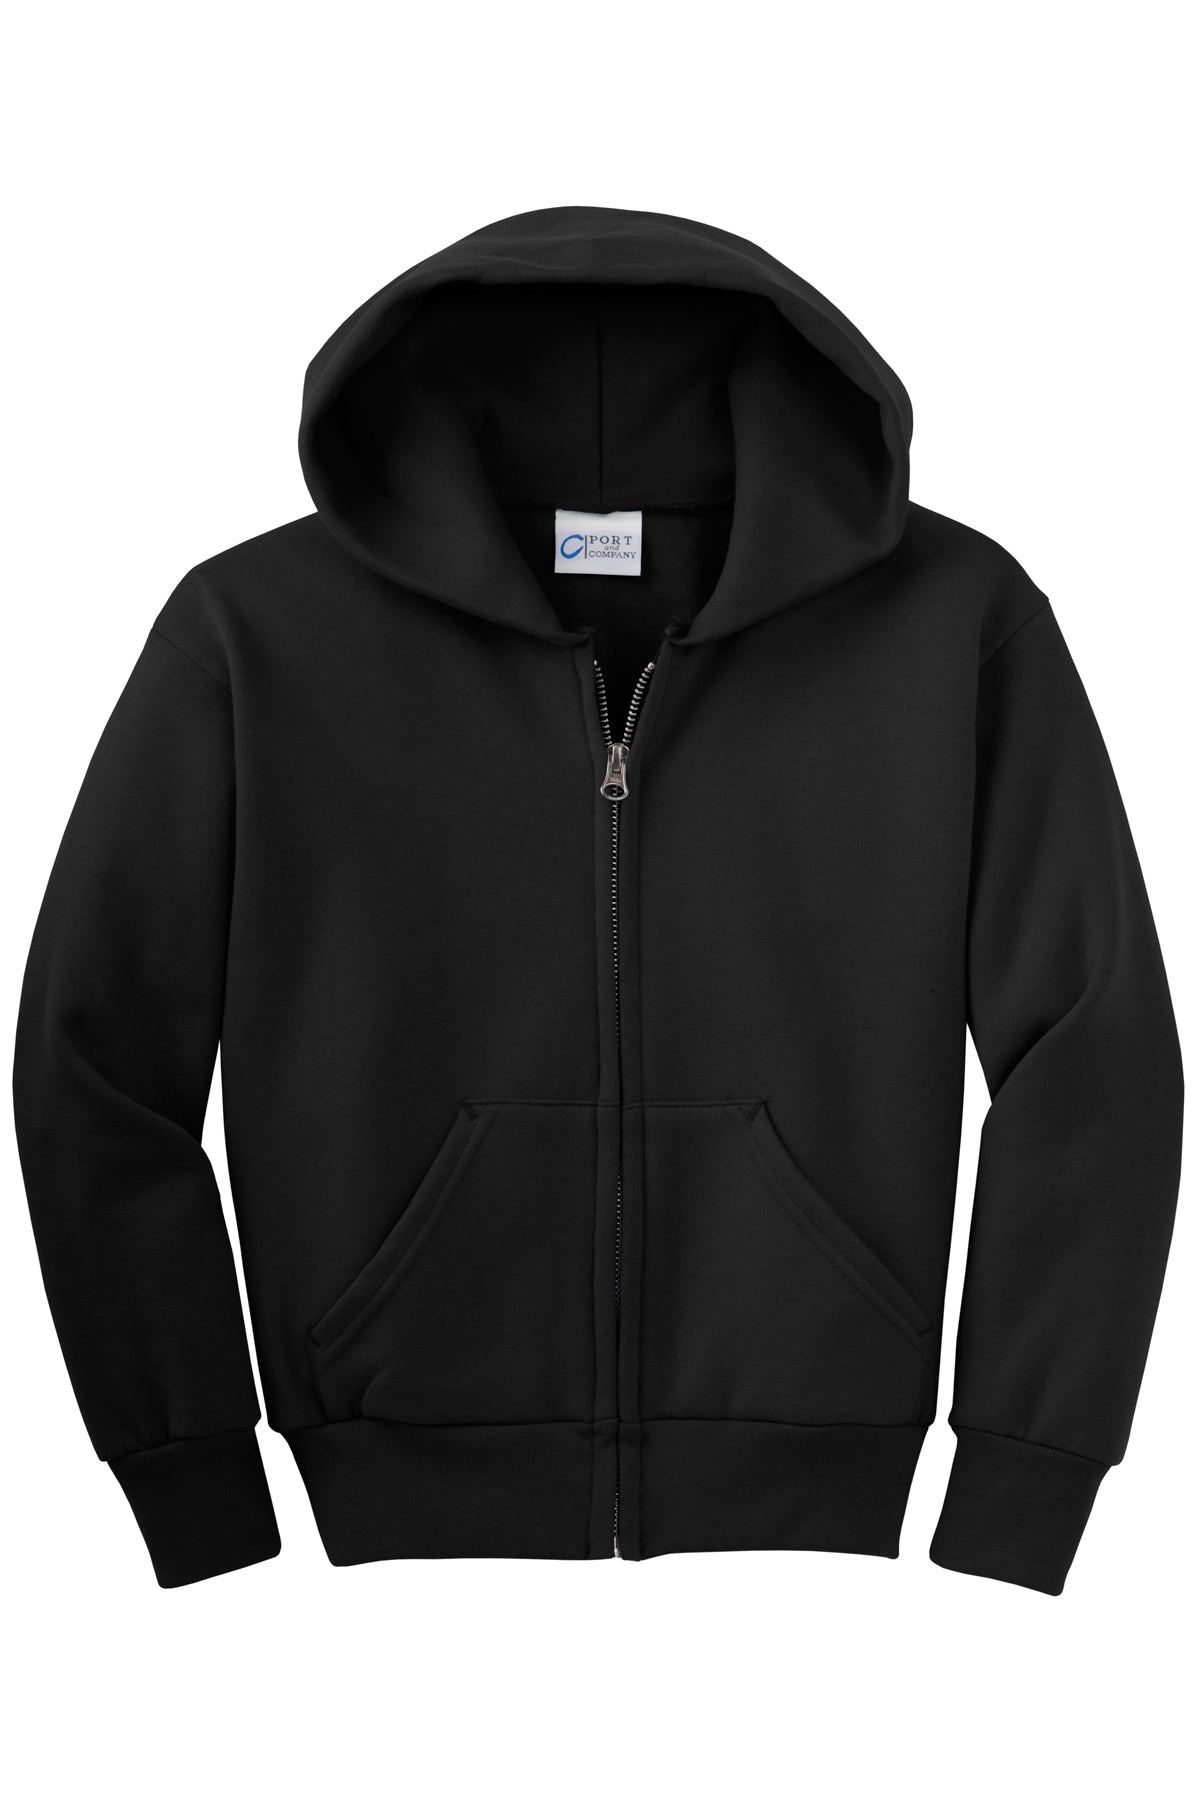 PC90YZH Port & Company® Youth Core Fleece Full-Zip Hooded Sweatshirt. XS-XL